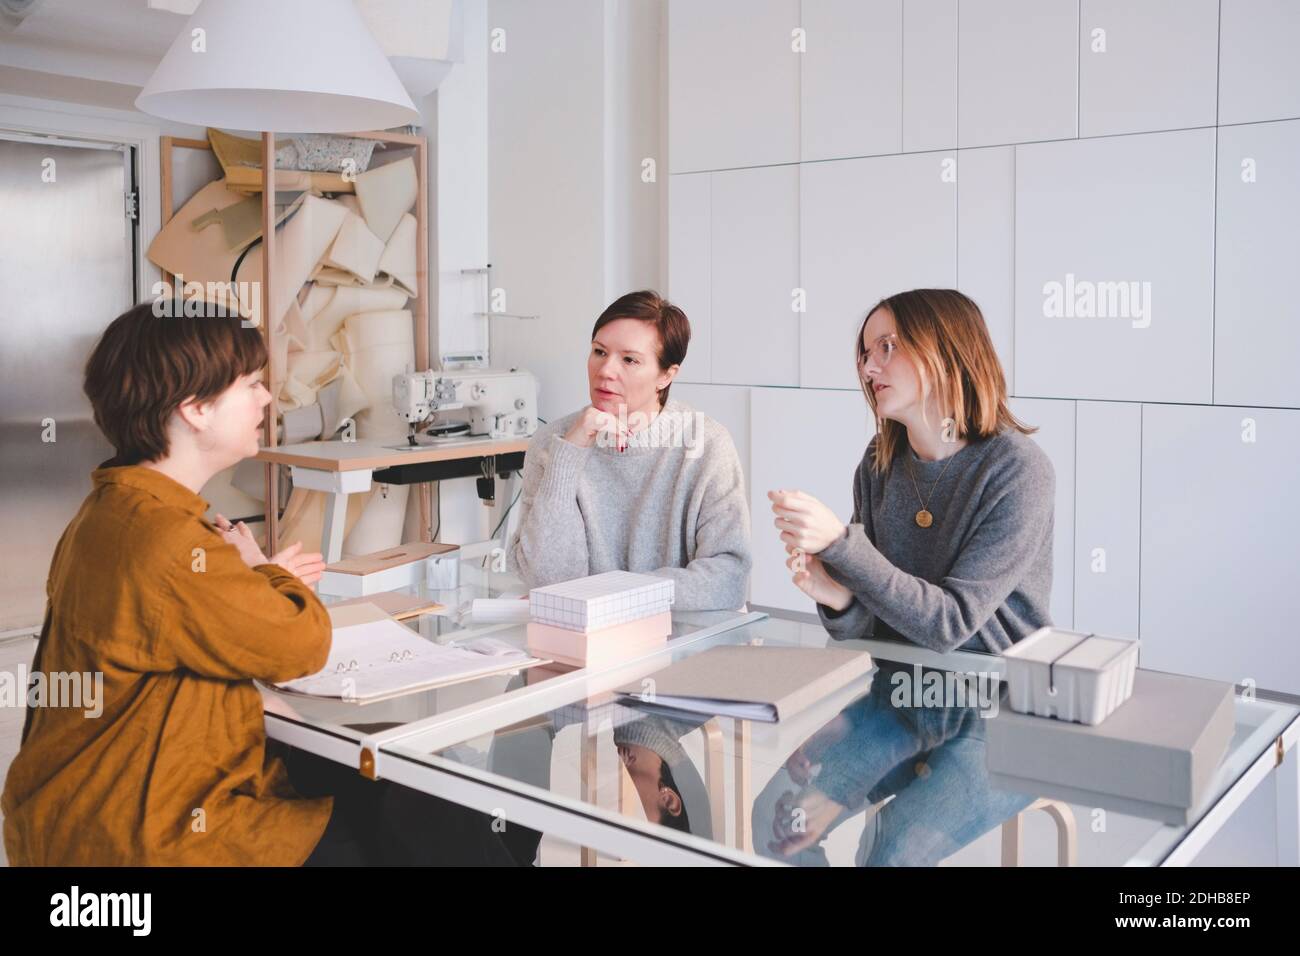 Female design professionals having discussion at desk in workshop Stock Photo